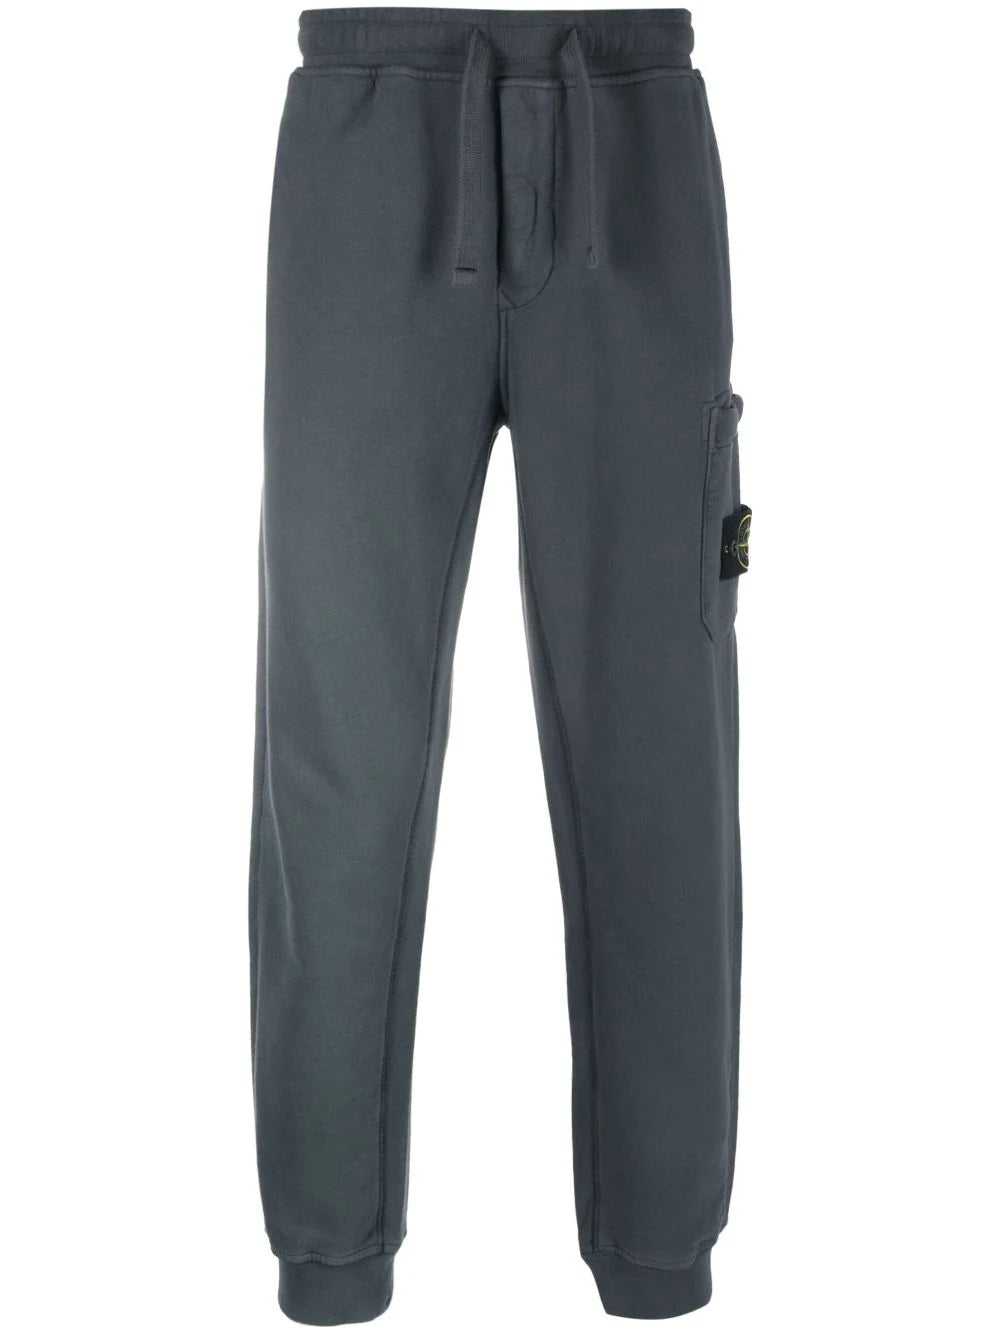 STONE ISLAND - Pantalon de jogging gris anthracite